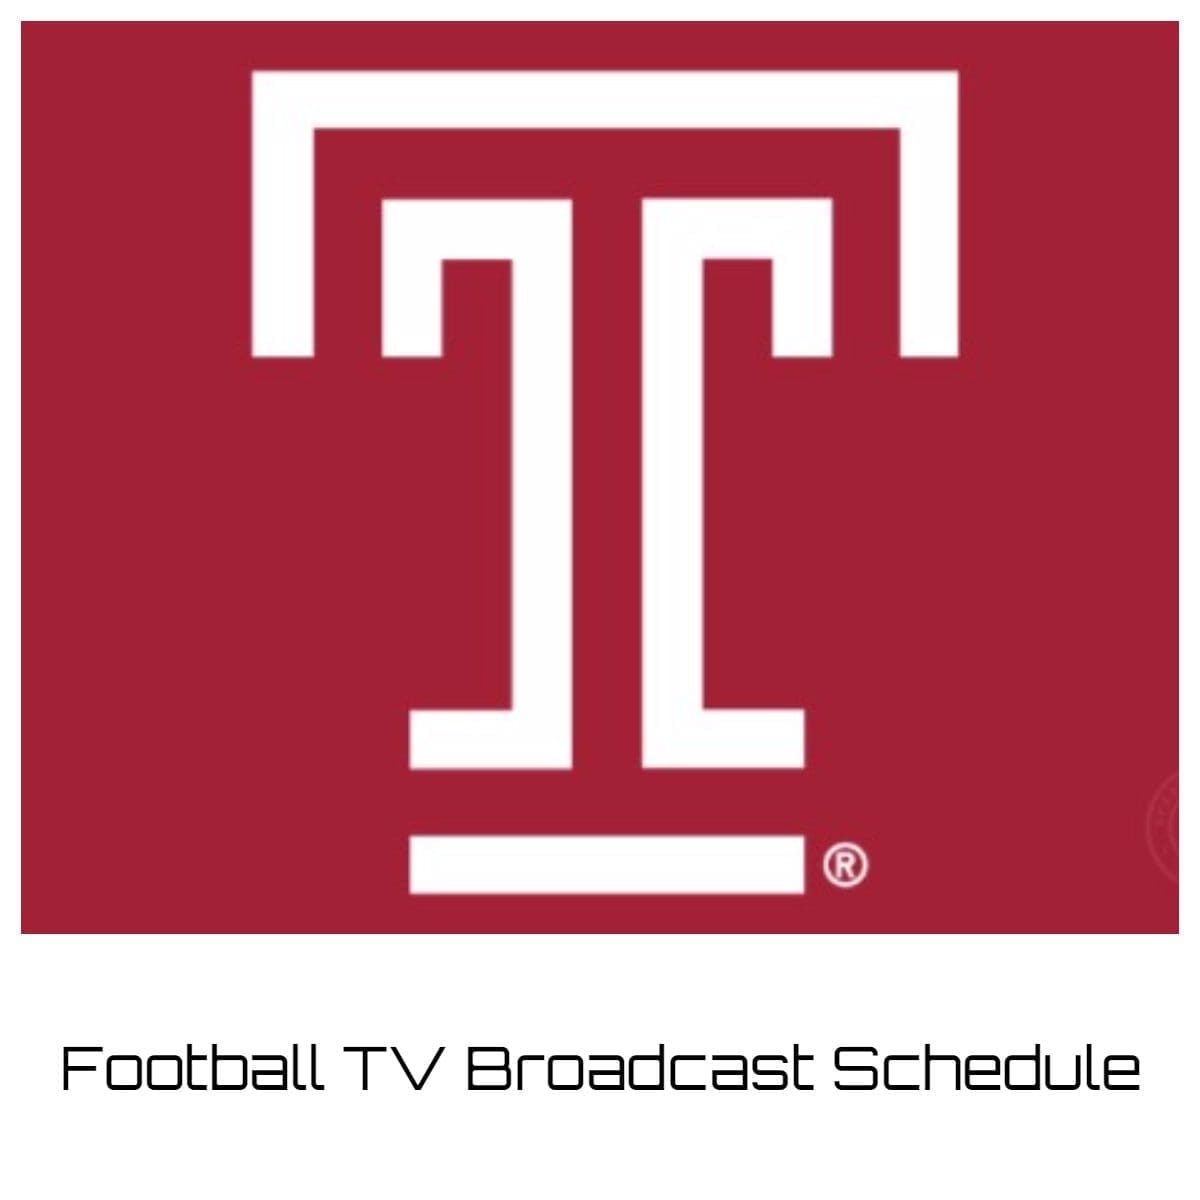 Temple Owls Football TV Broadcast Schedule